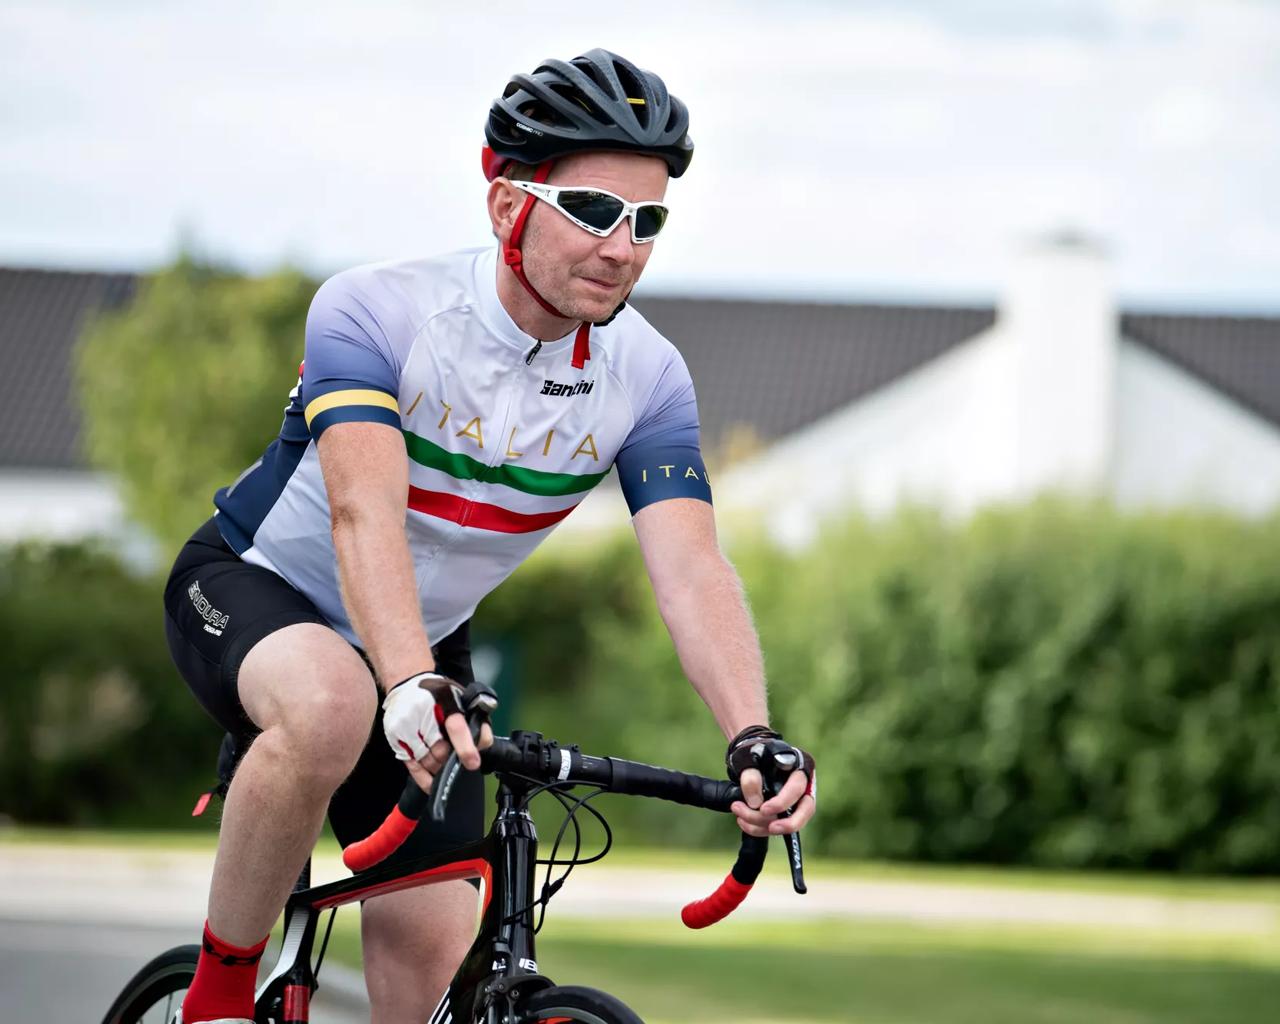 Lars Emil cyklende